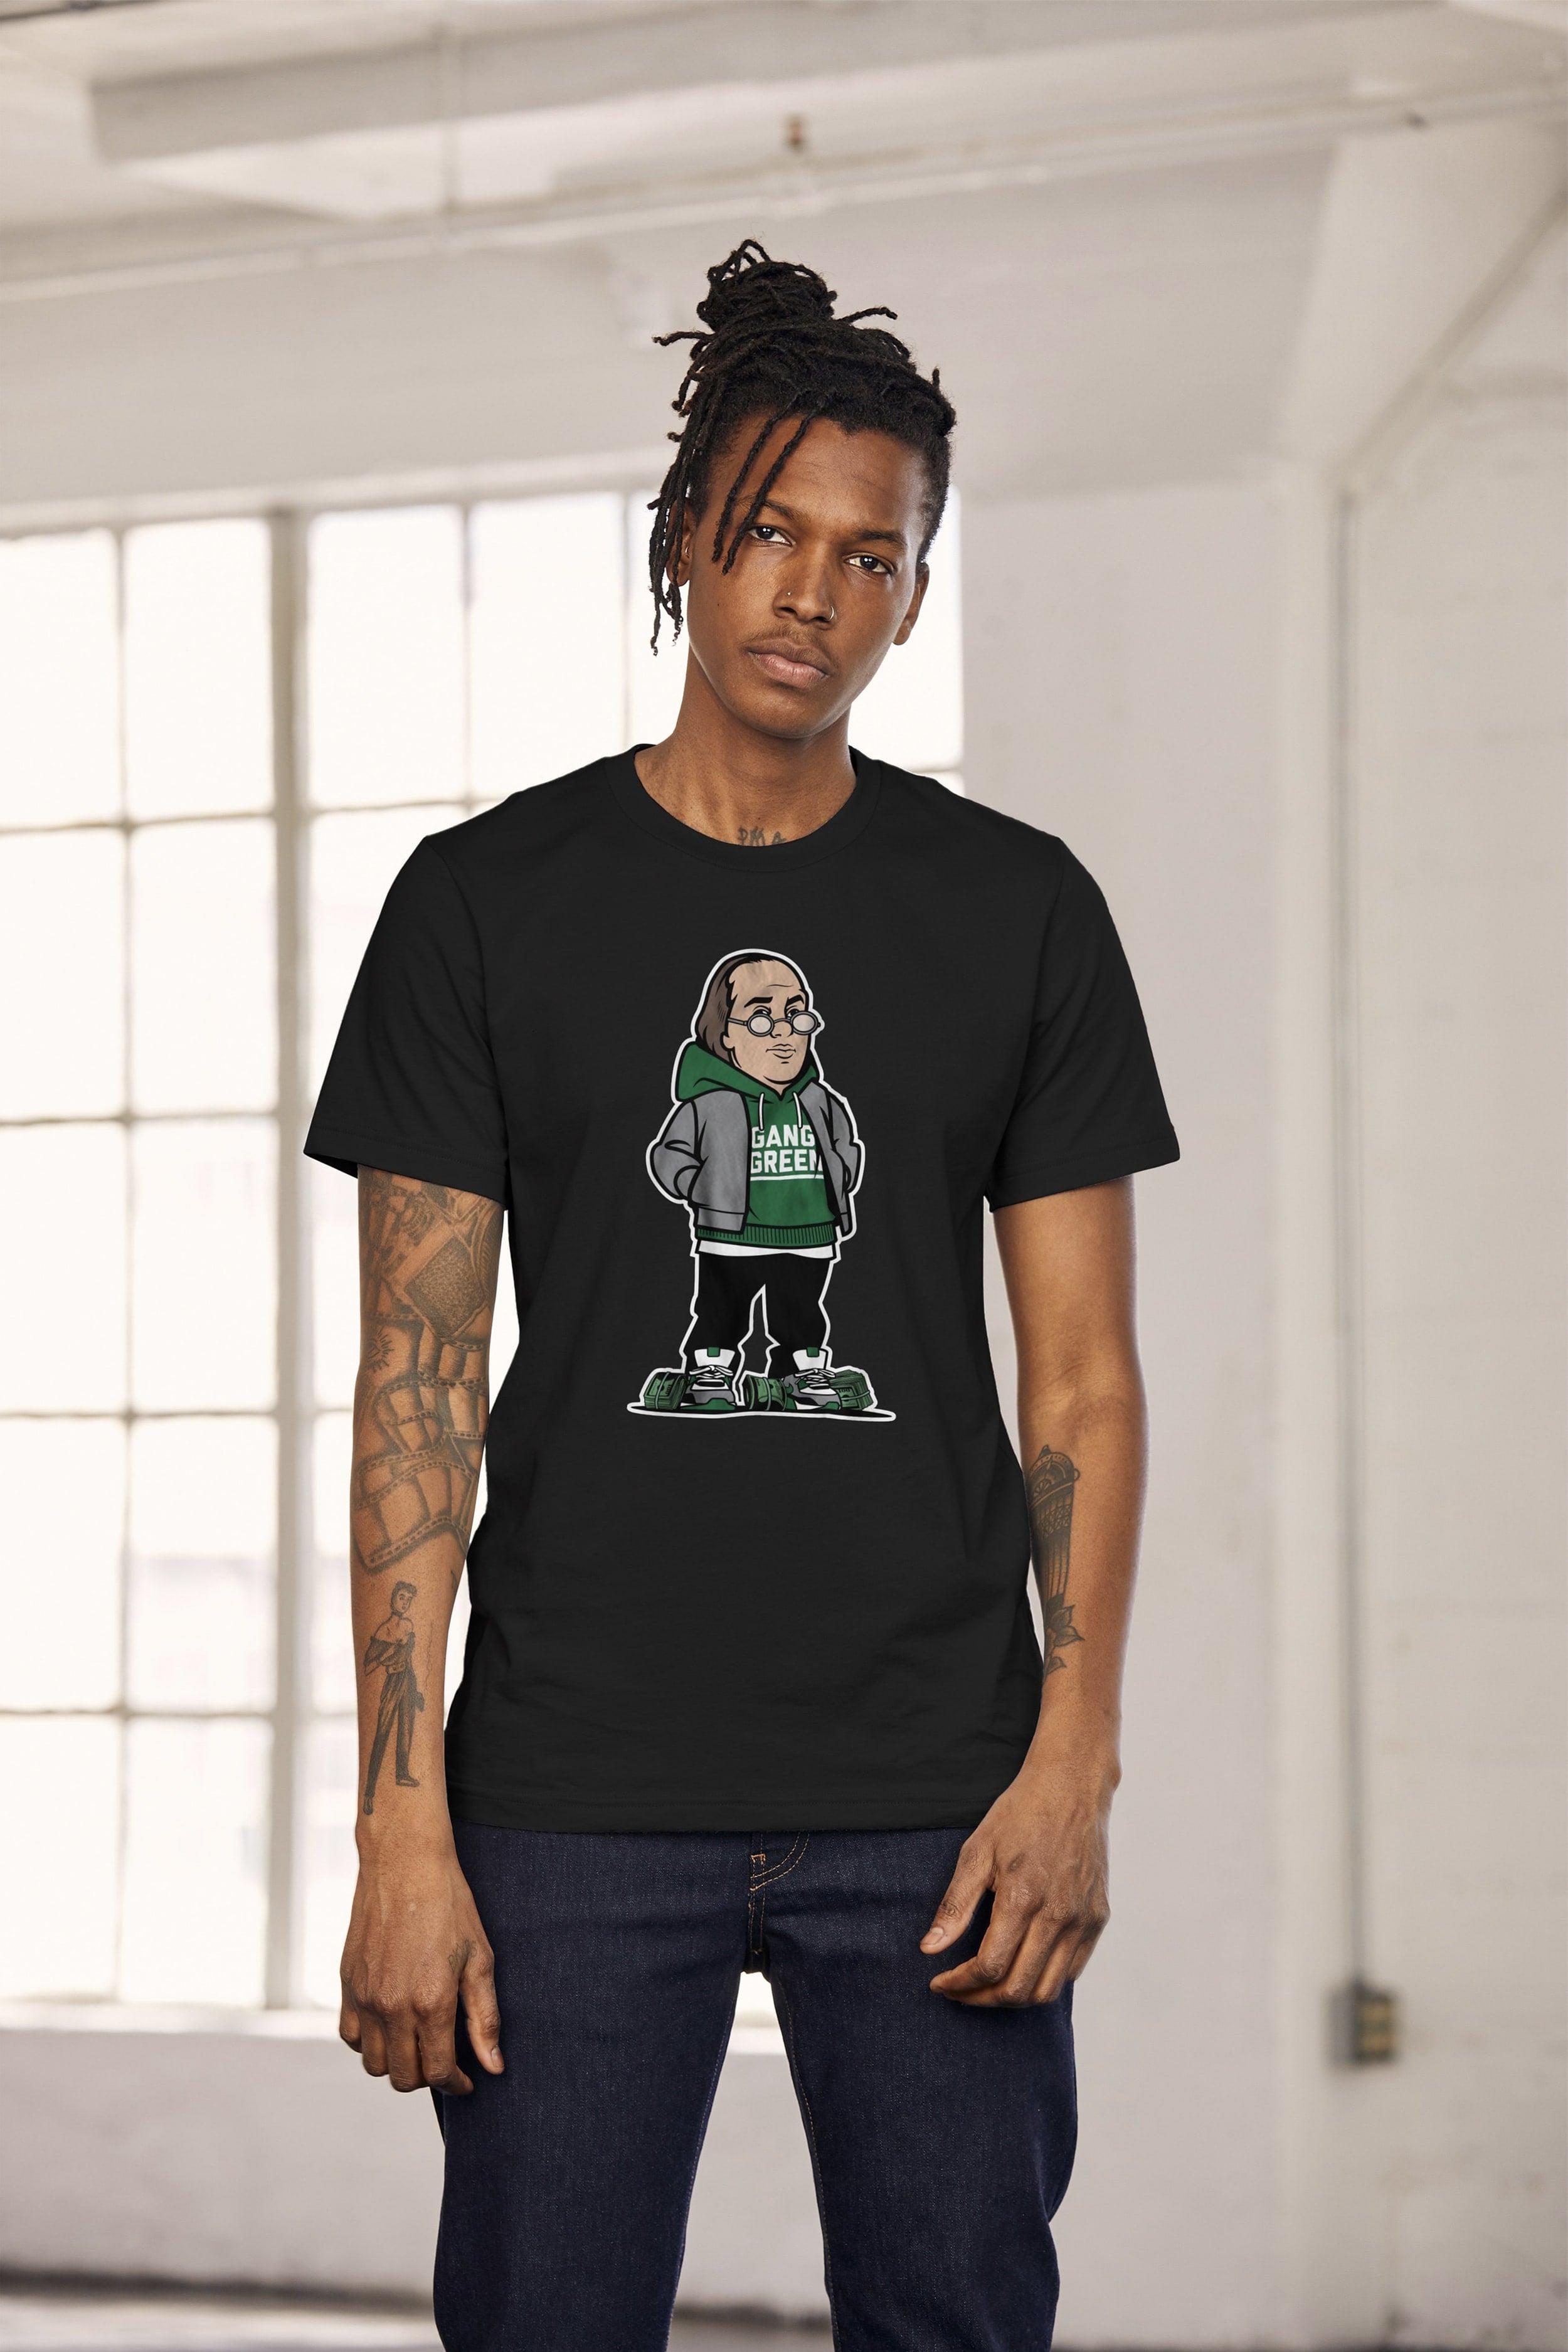 Philly Sports Shirts - Philadelphia Sports T-Shirts, Hoodies & Apparel